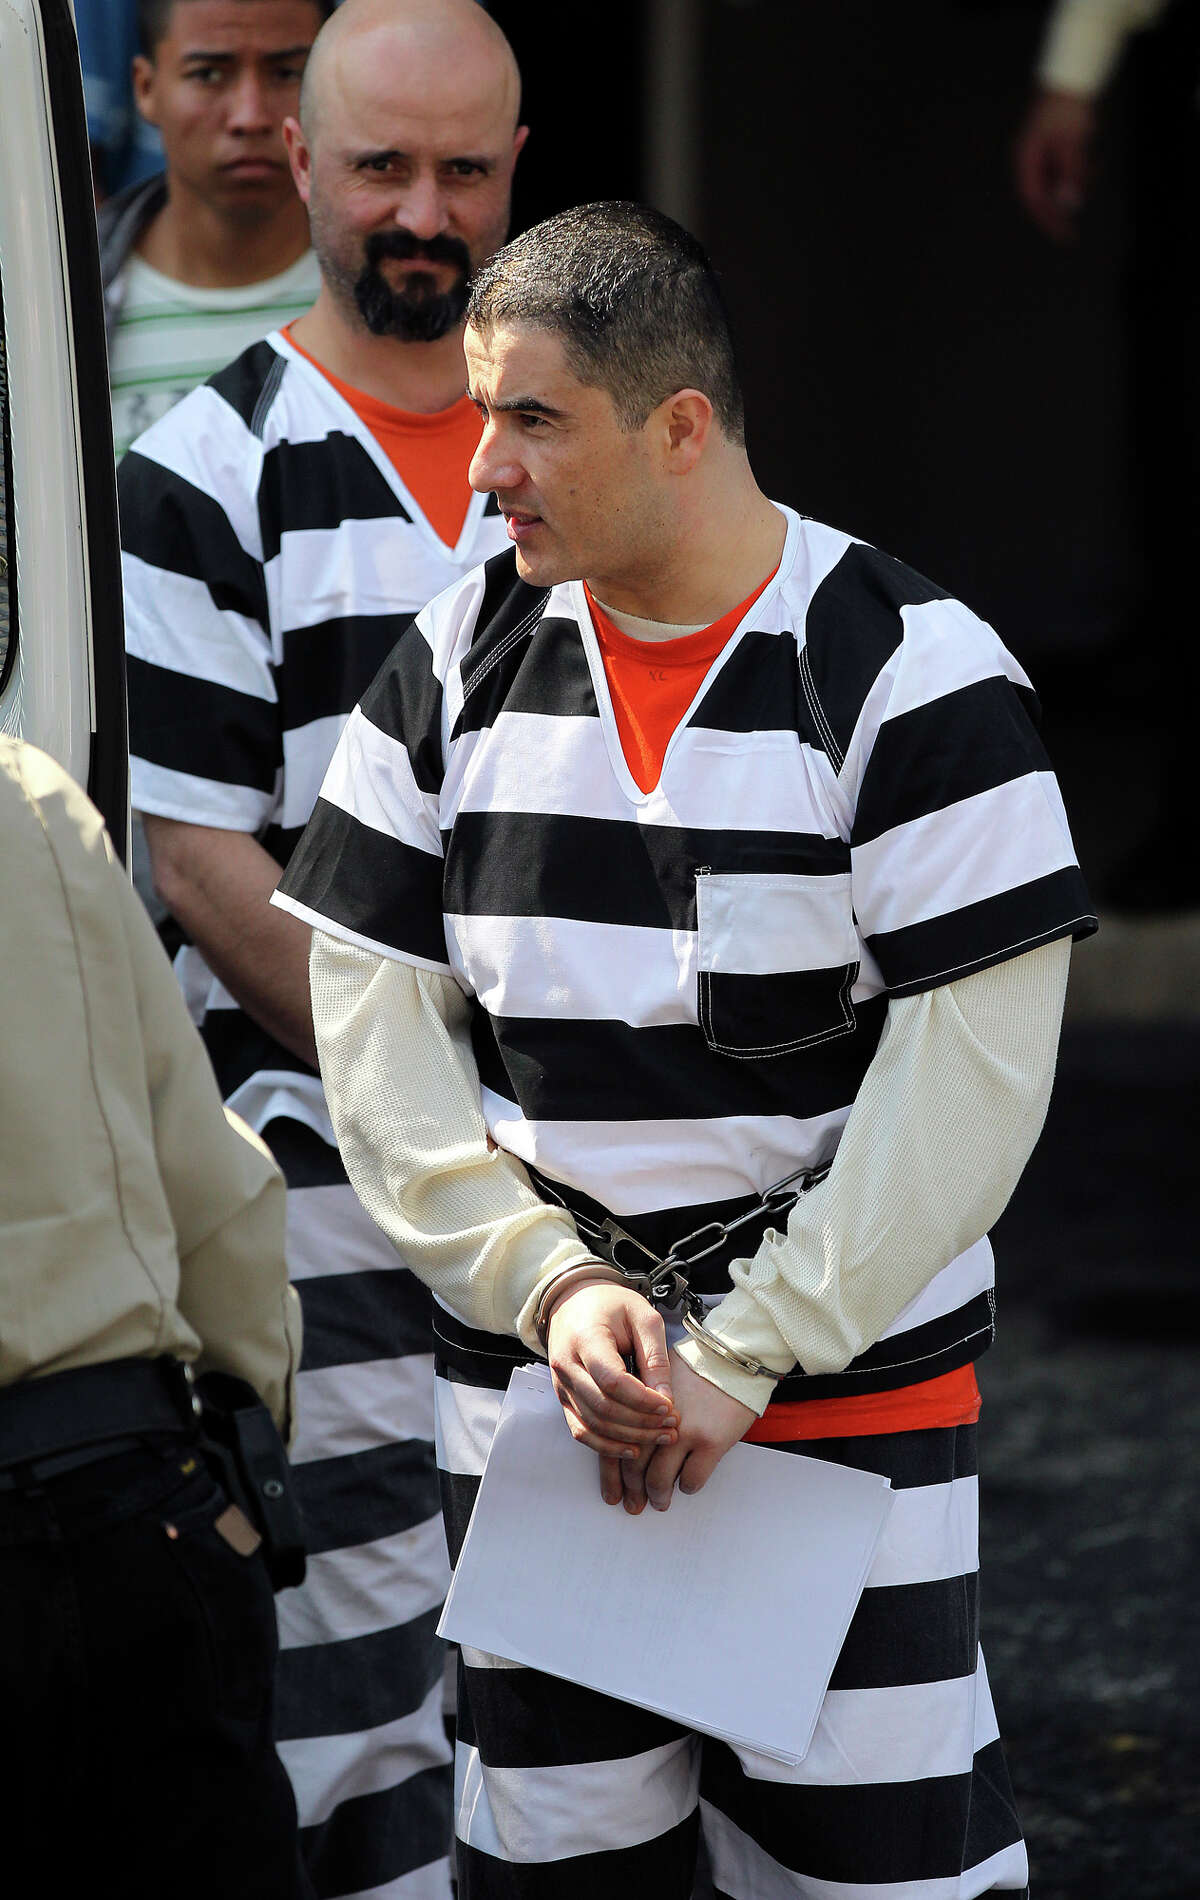 Jorge Vázquez Sánchez also was convicted of money laundering.